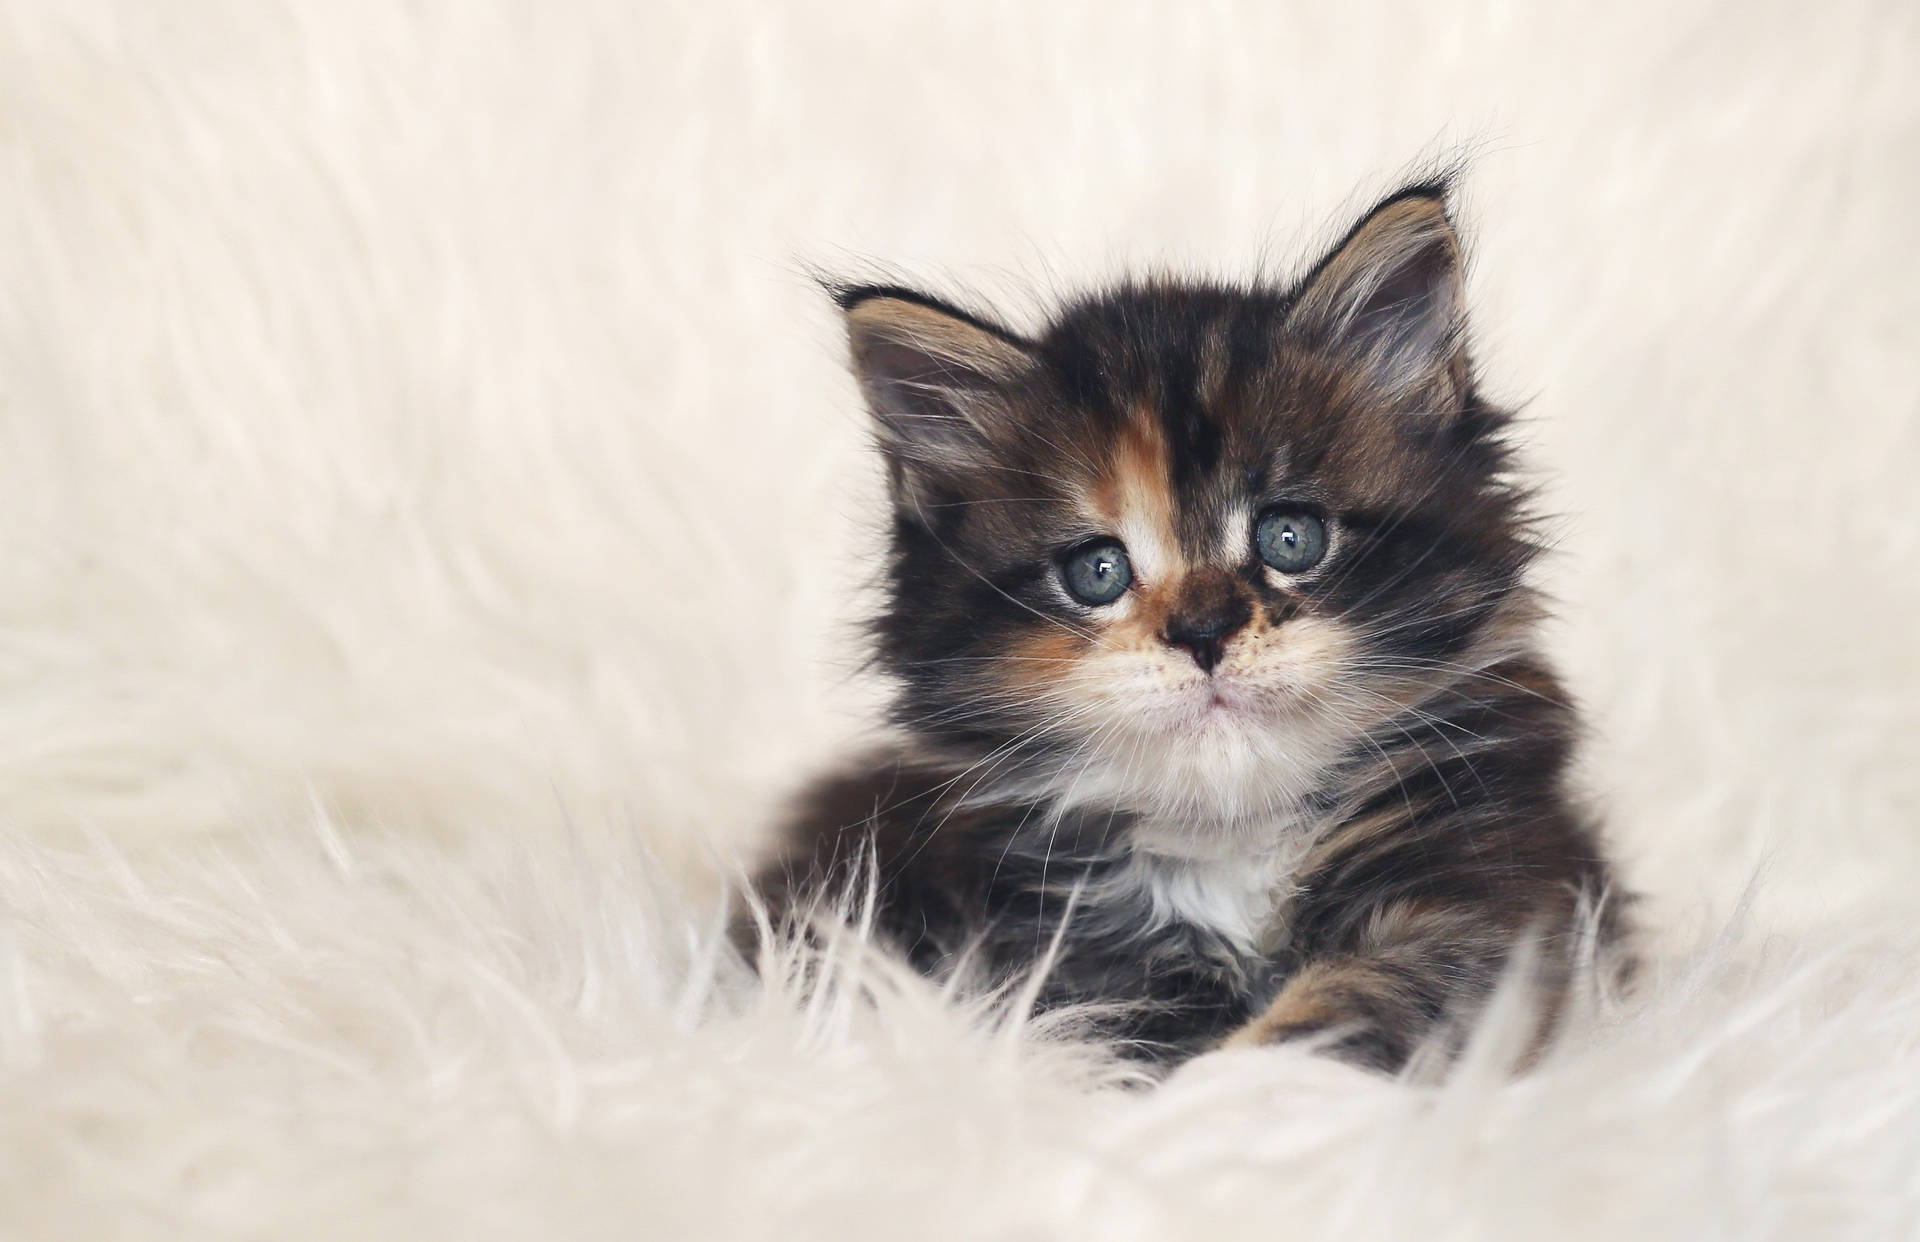 Caption: Adorable Feline In A Playful Stance Wallpaper